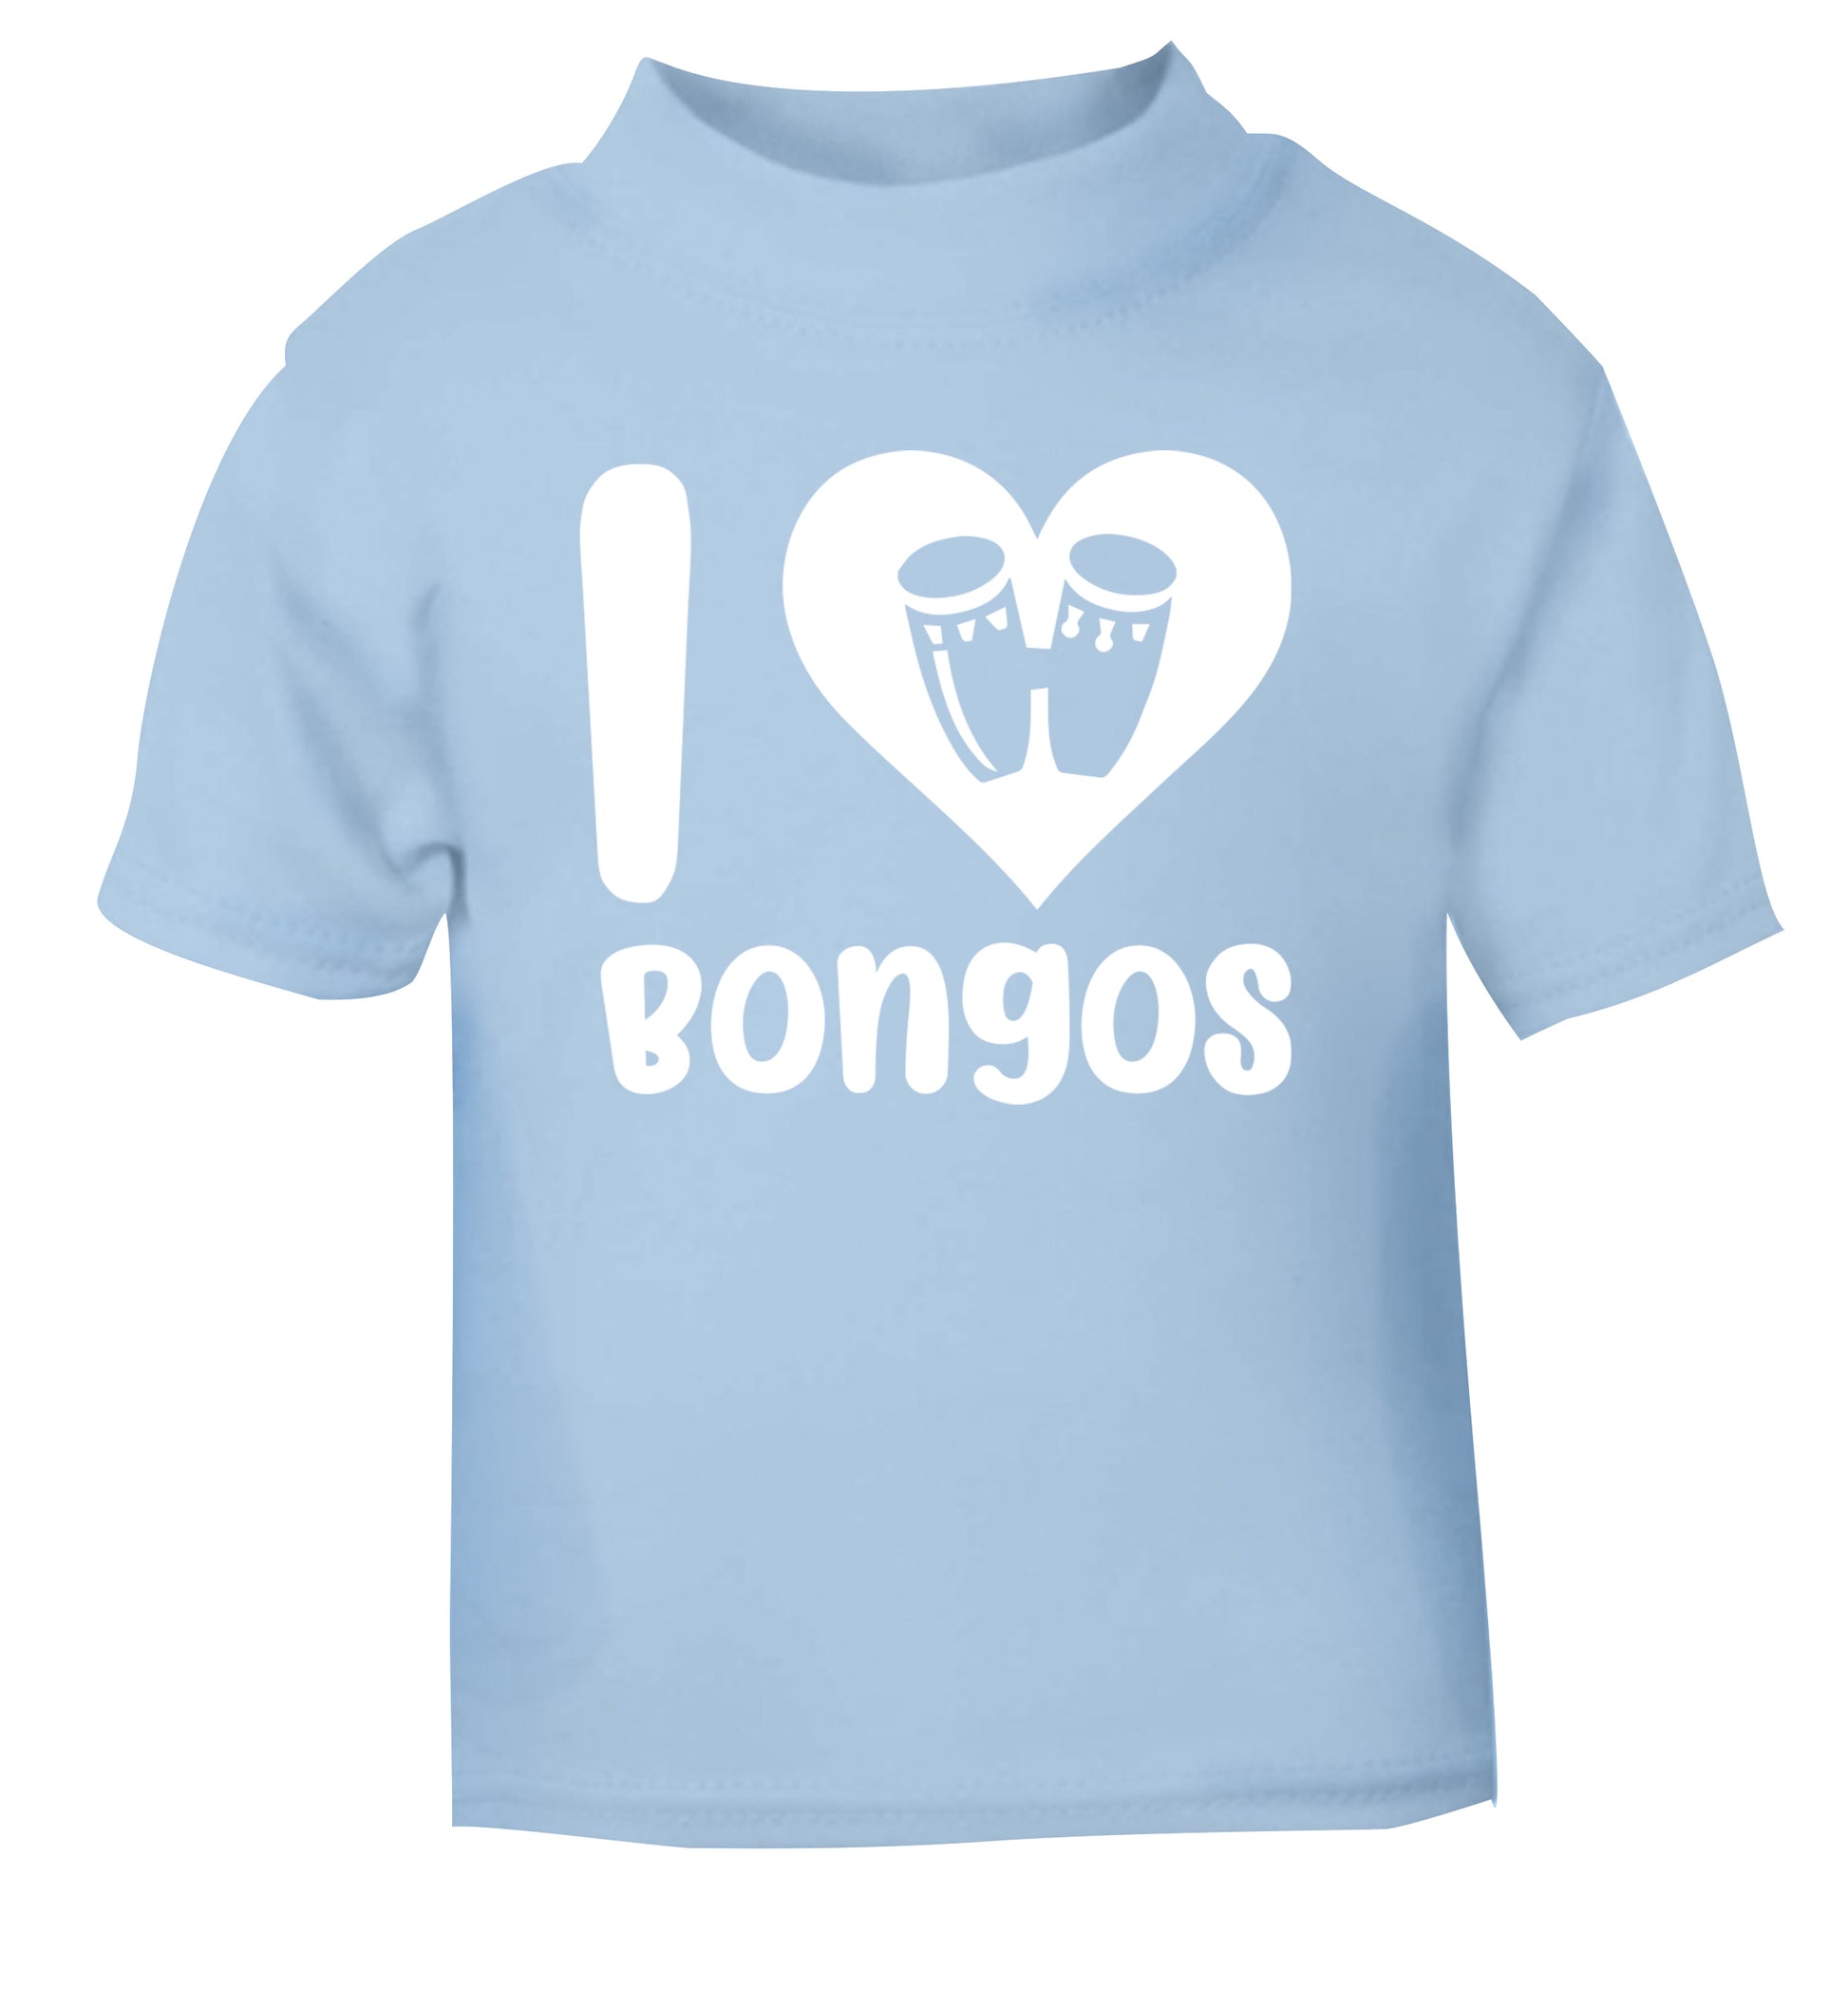 I love bongos light blue Baby Toddler Tshirt 2 Years